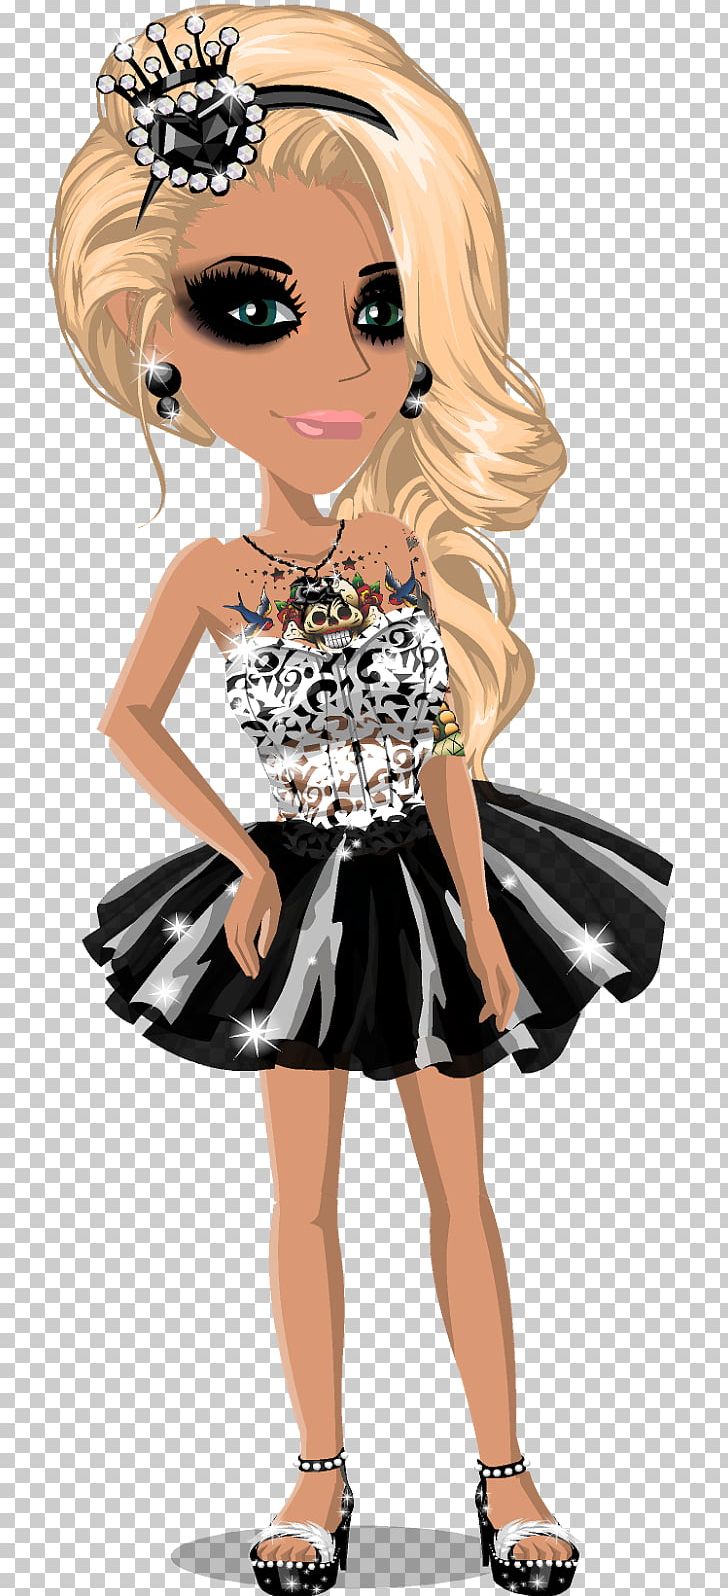 Blond Barbie Pin-up Girl Black Hair PNG, Clipart, Art, Barbie, Black, Black Hair, Blond Free PNG Download